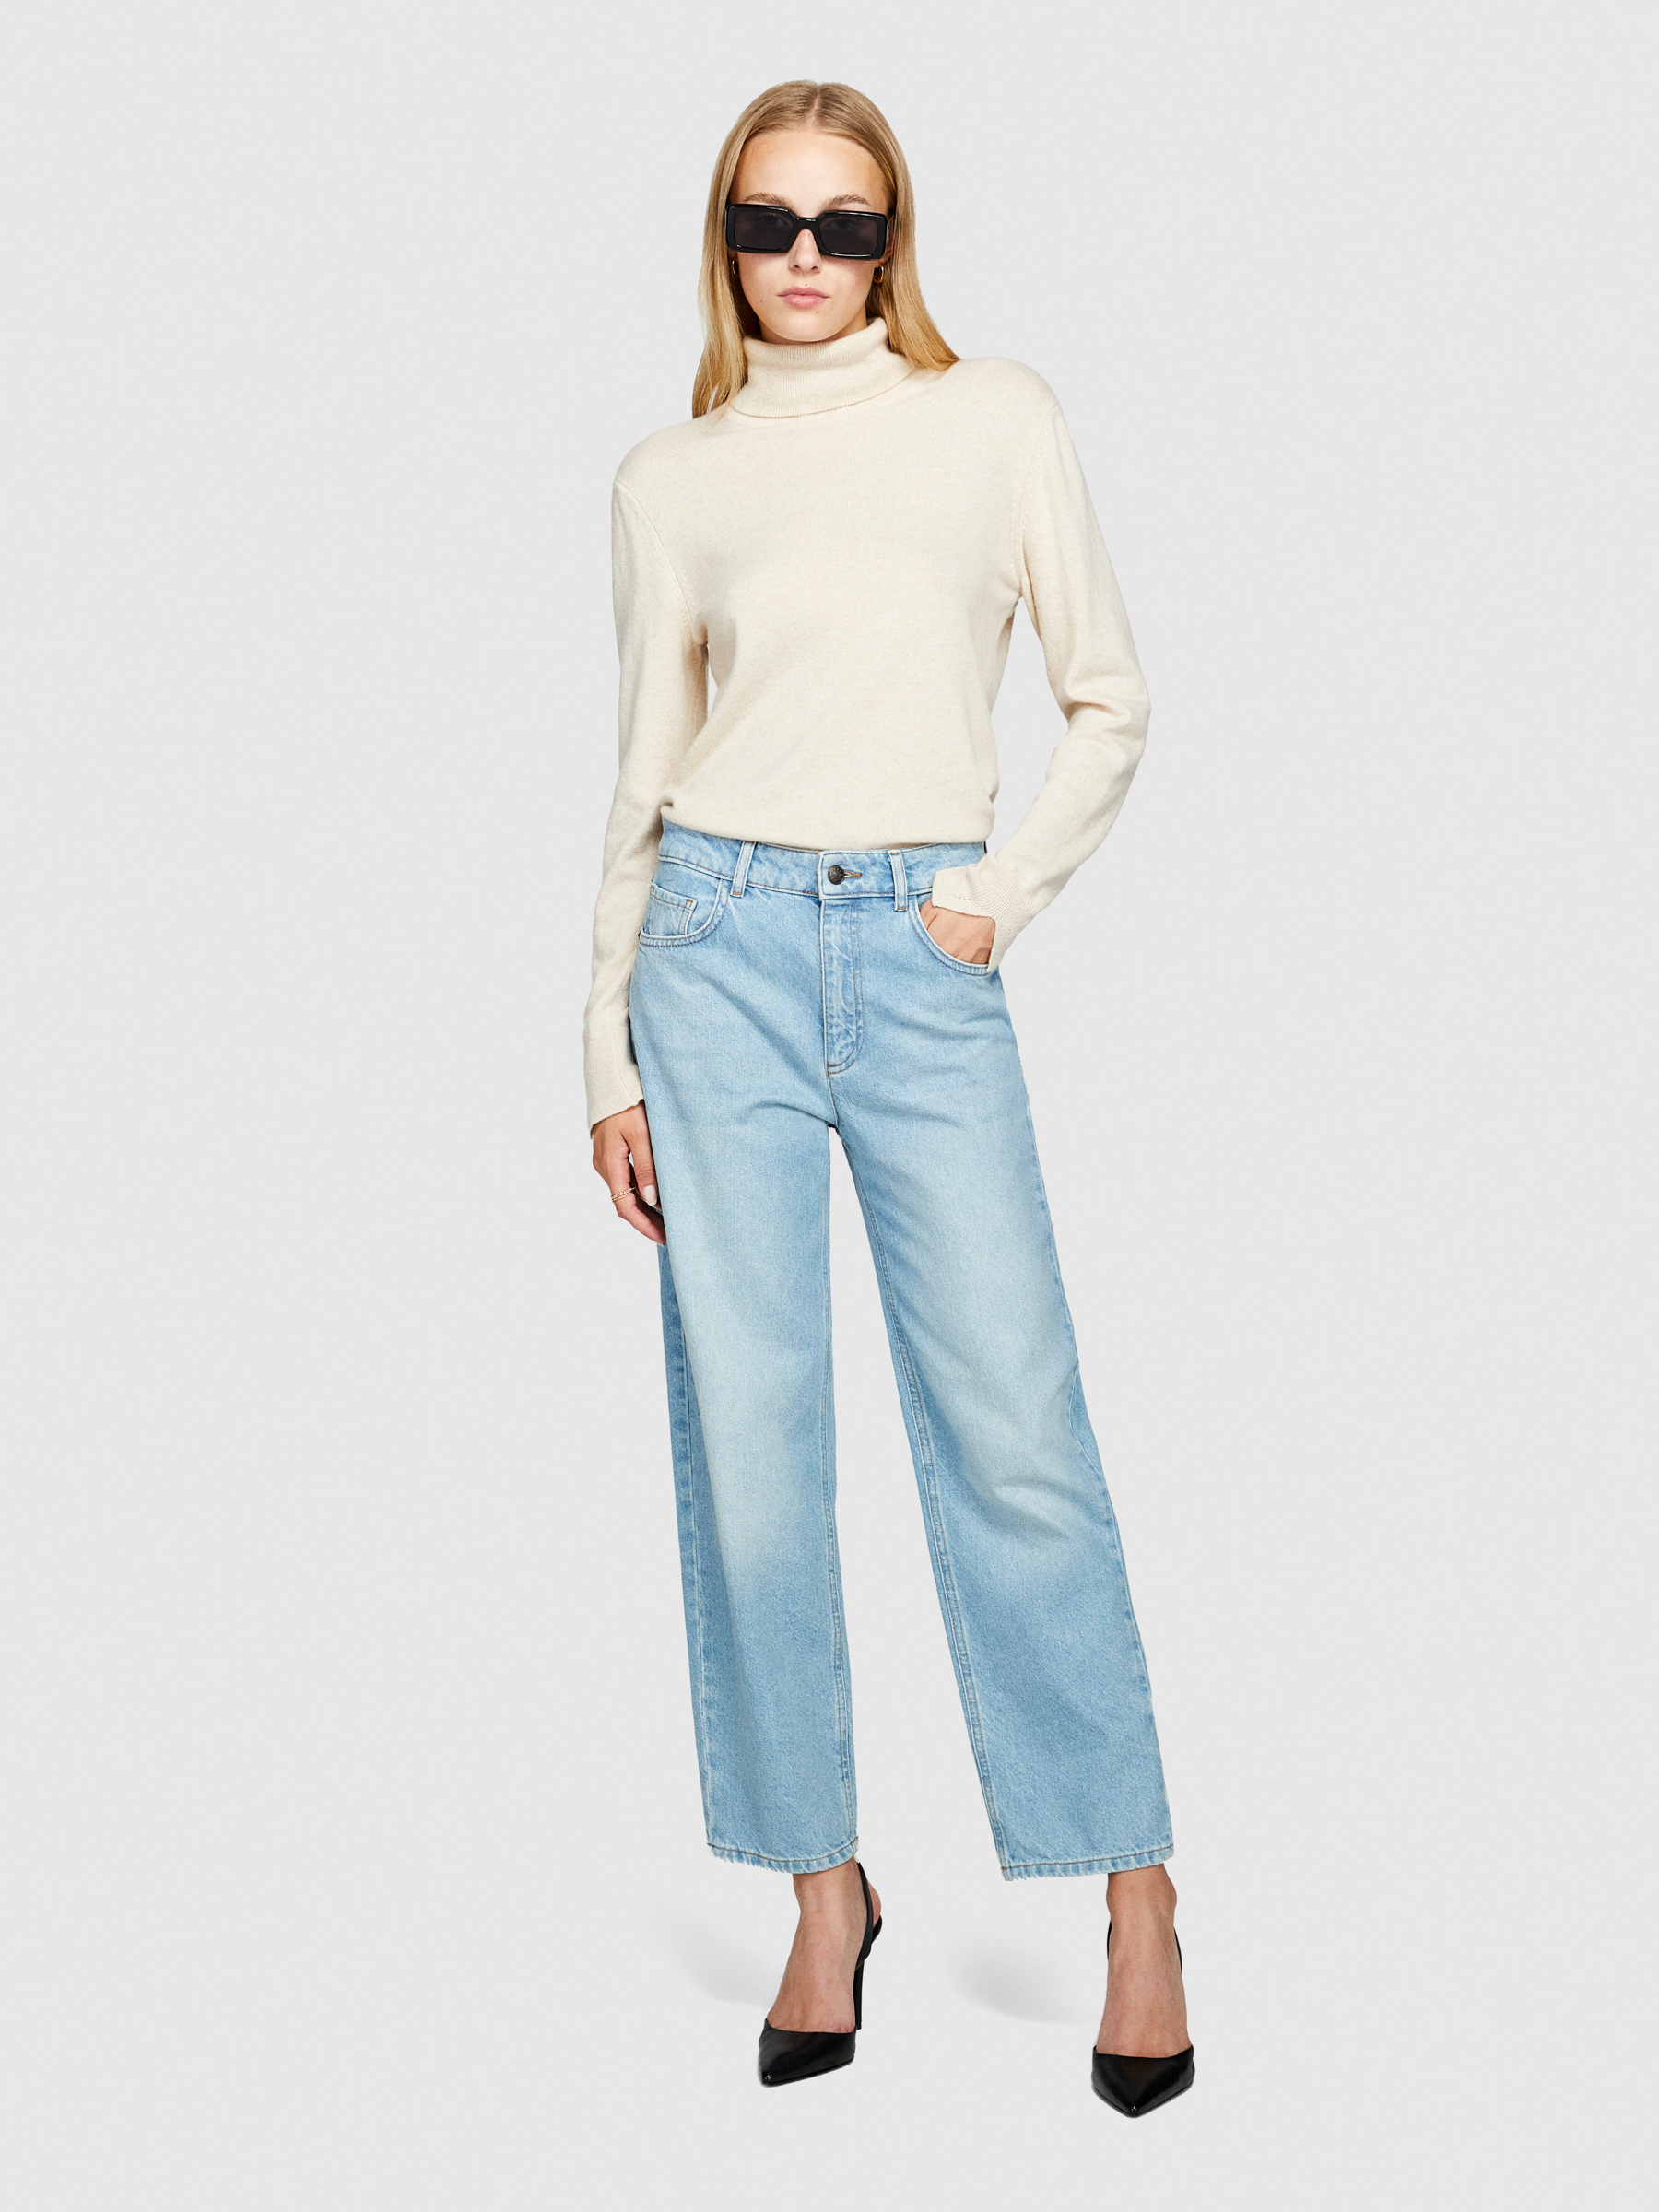 Sisley - High Neck Sweater, Woman, Creamy White, Size: S